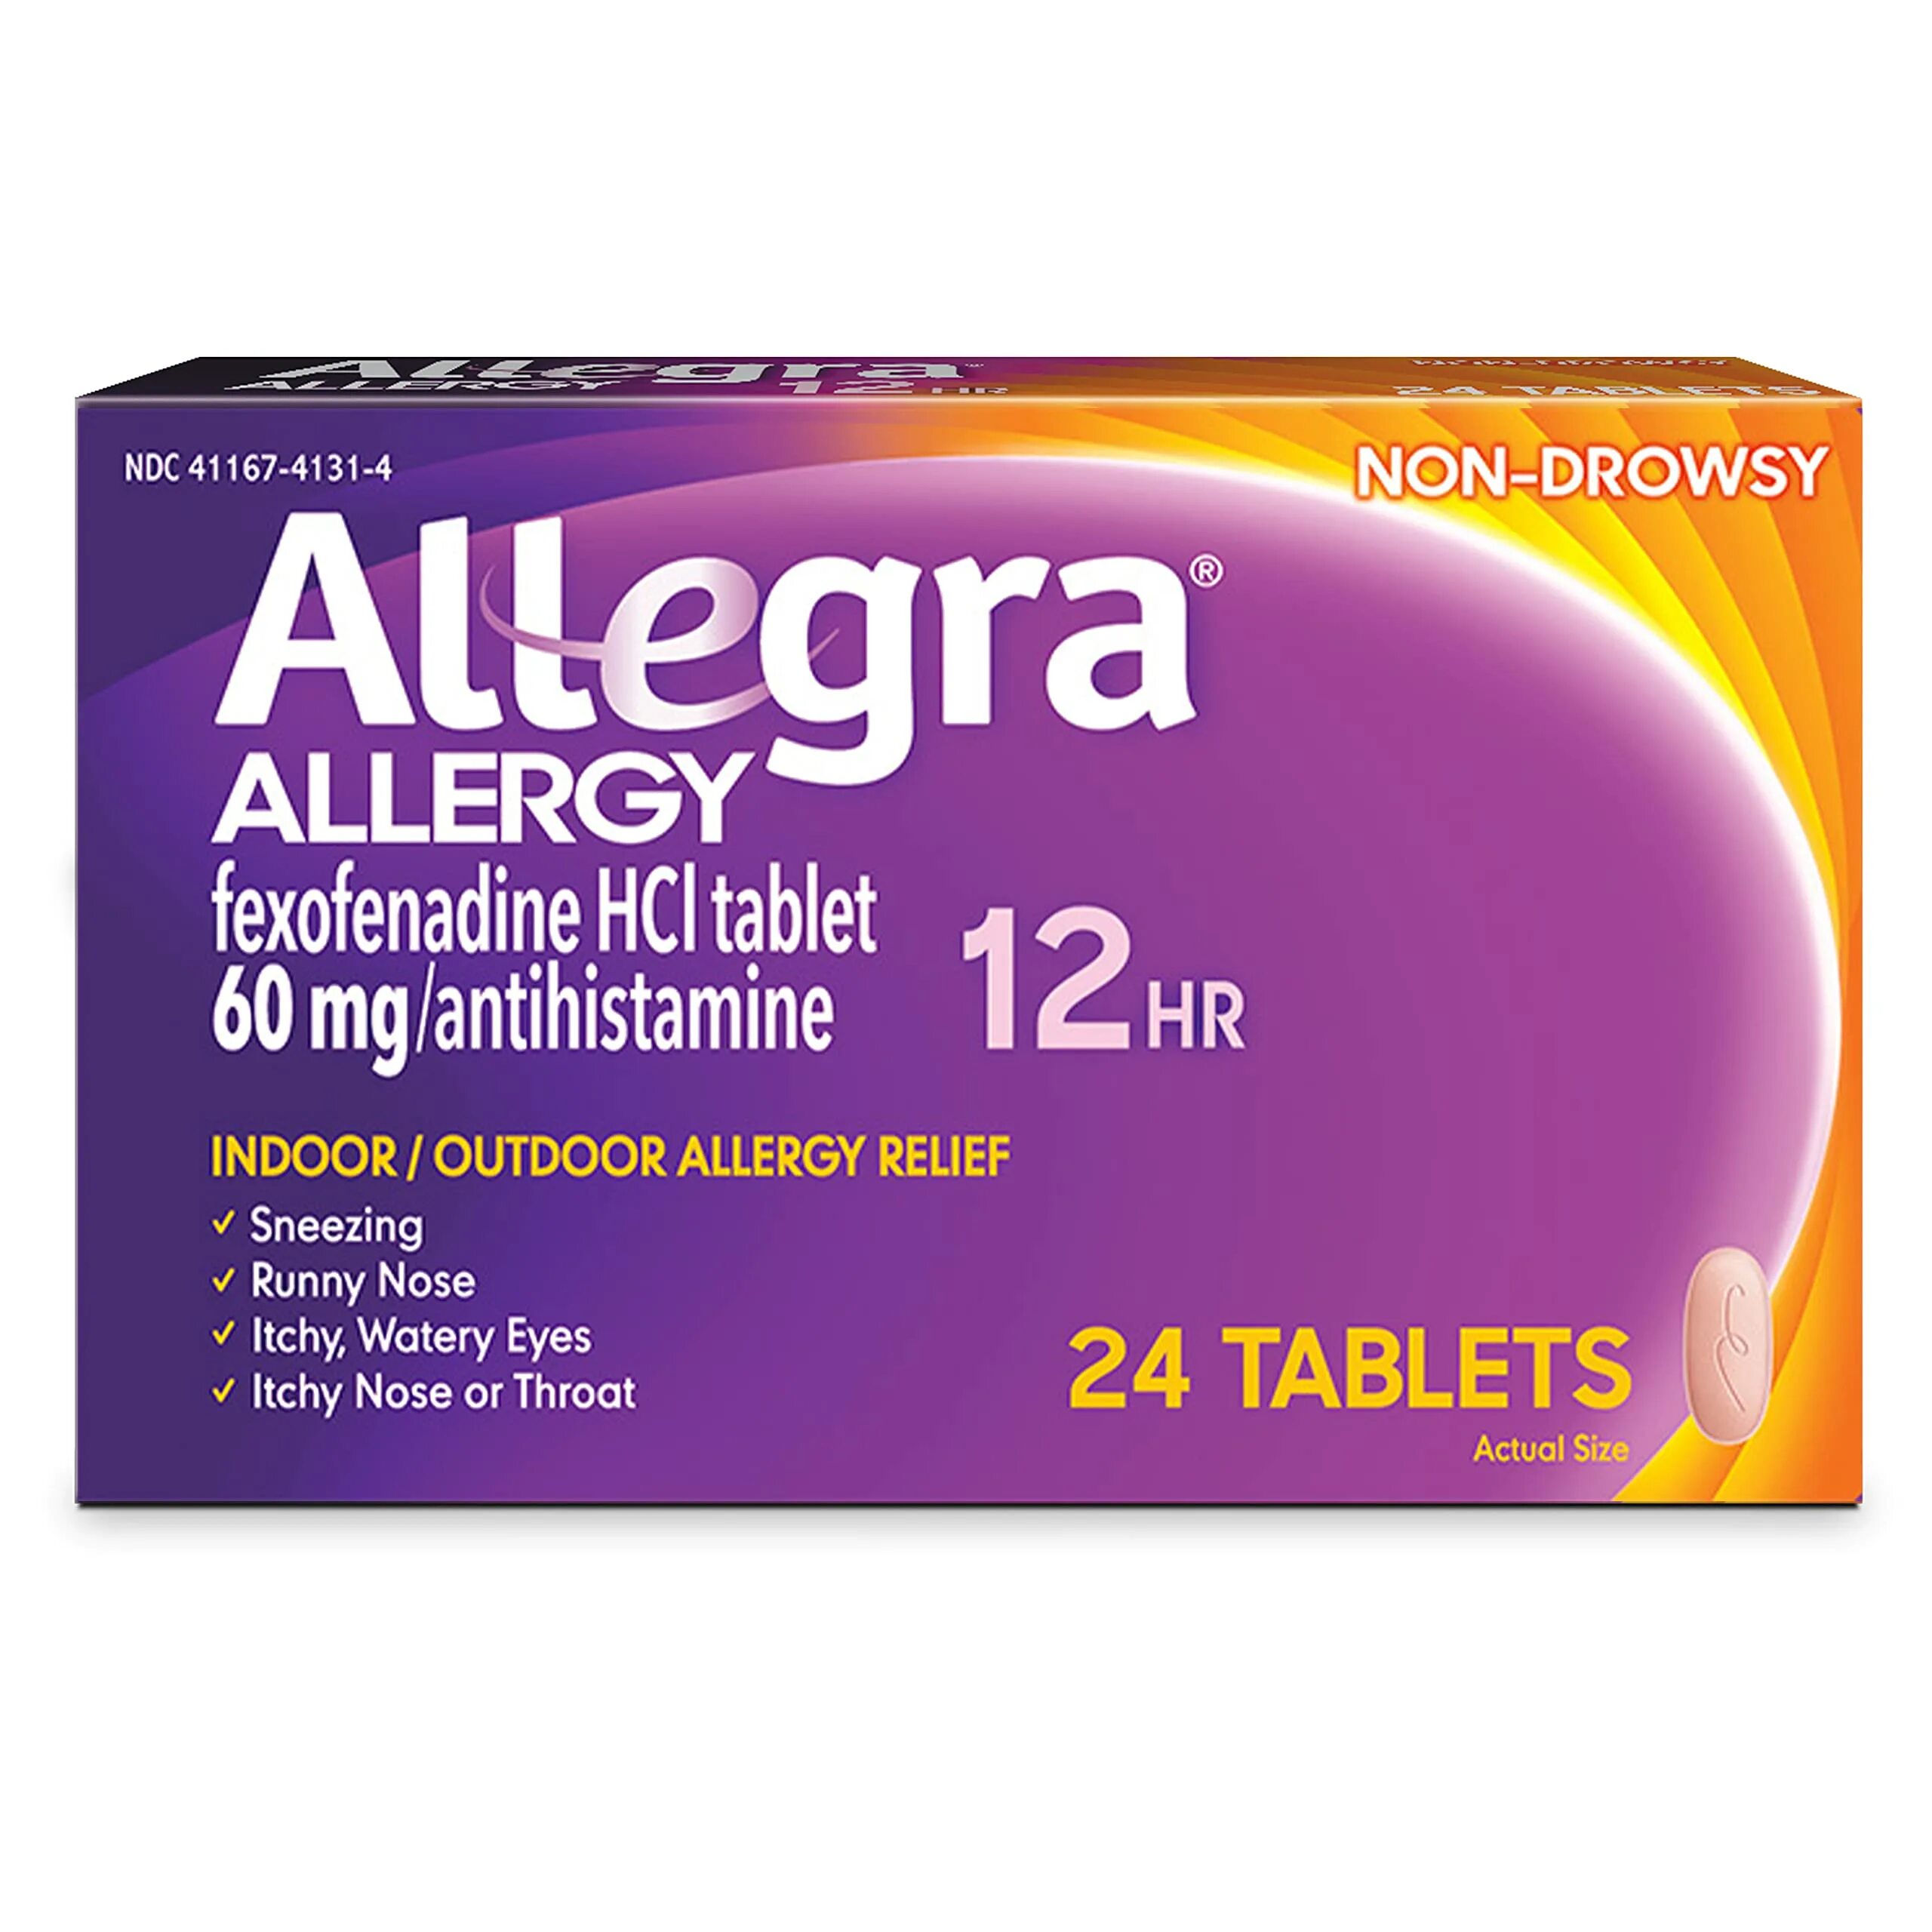 Allergy Relief таблетки. Аллегра аллергия 60mg. Аллегра 140. Allegra таблетки. Аллегра купить